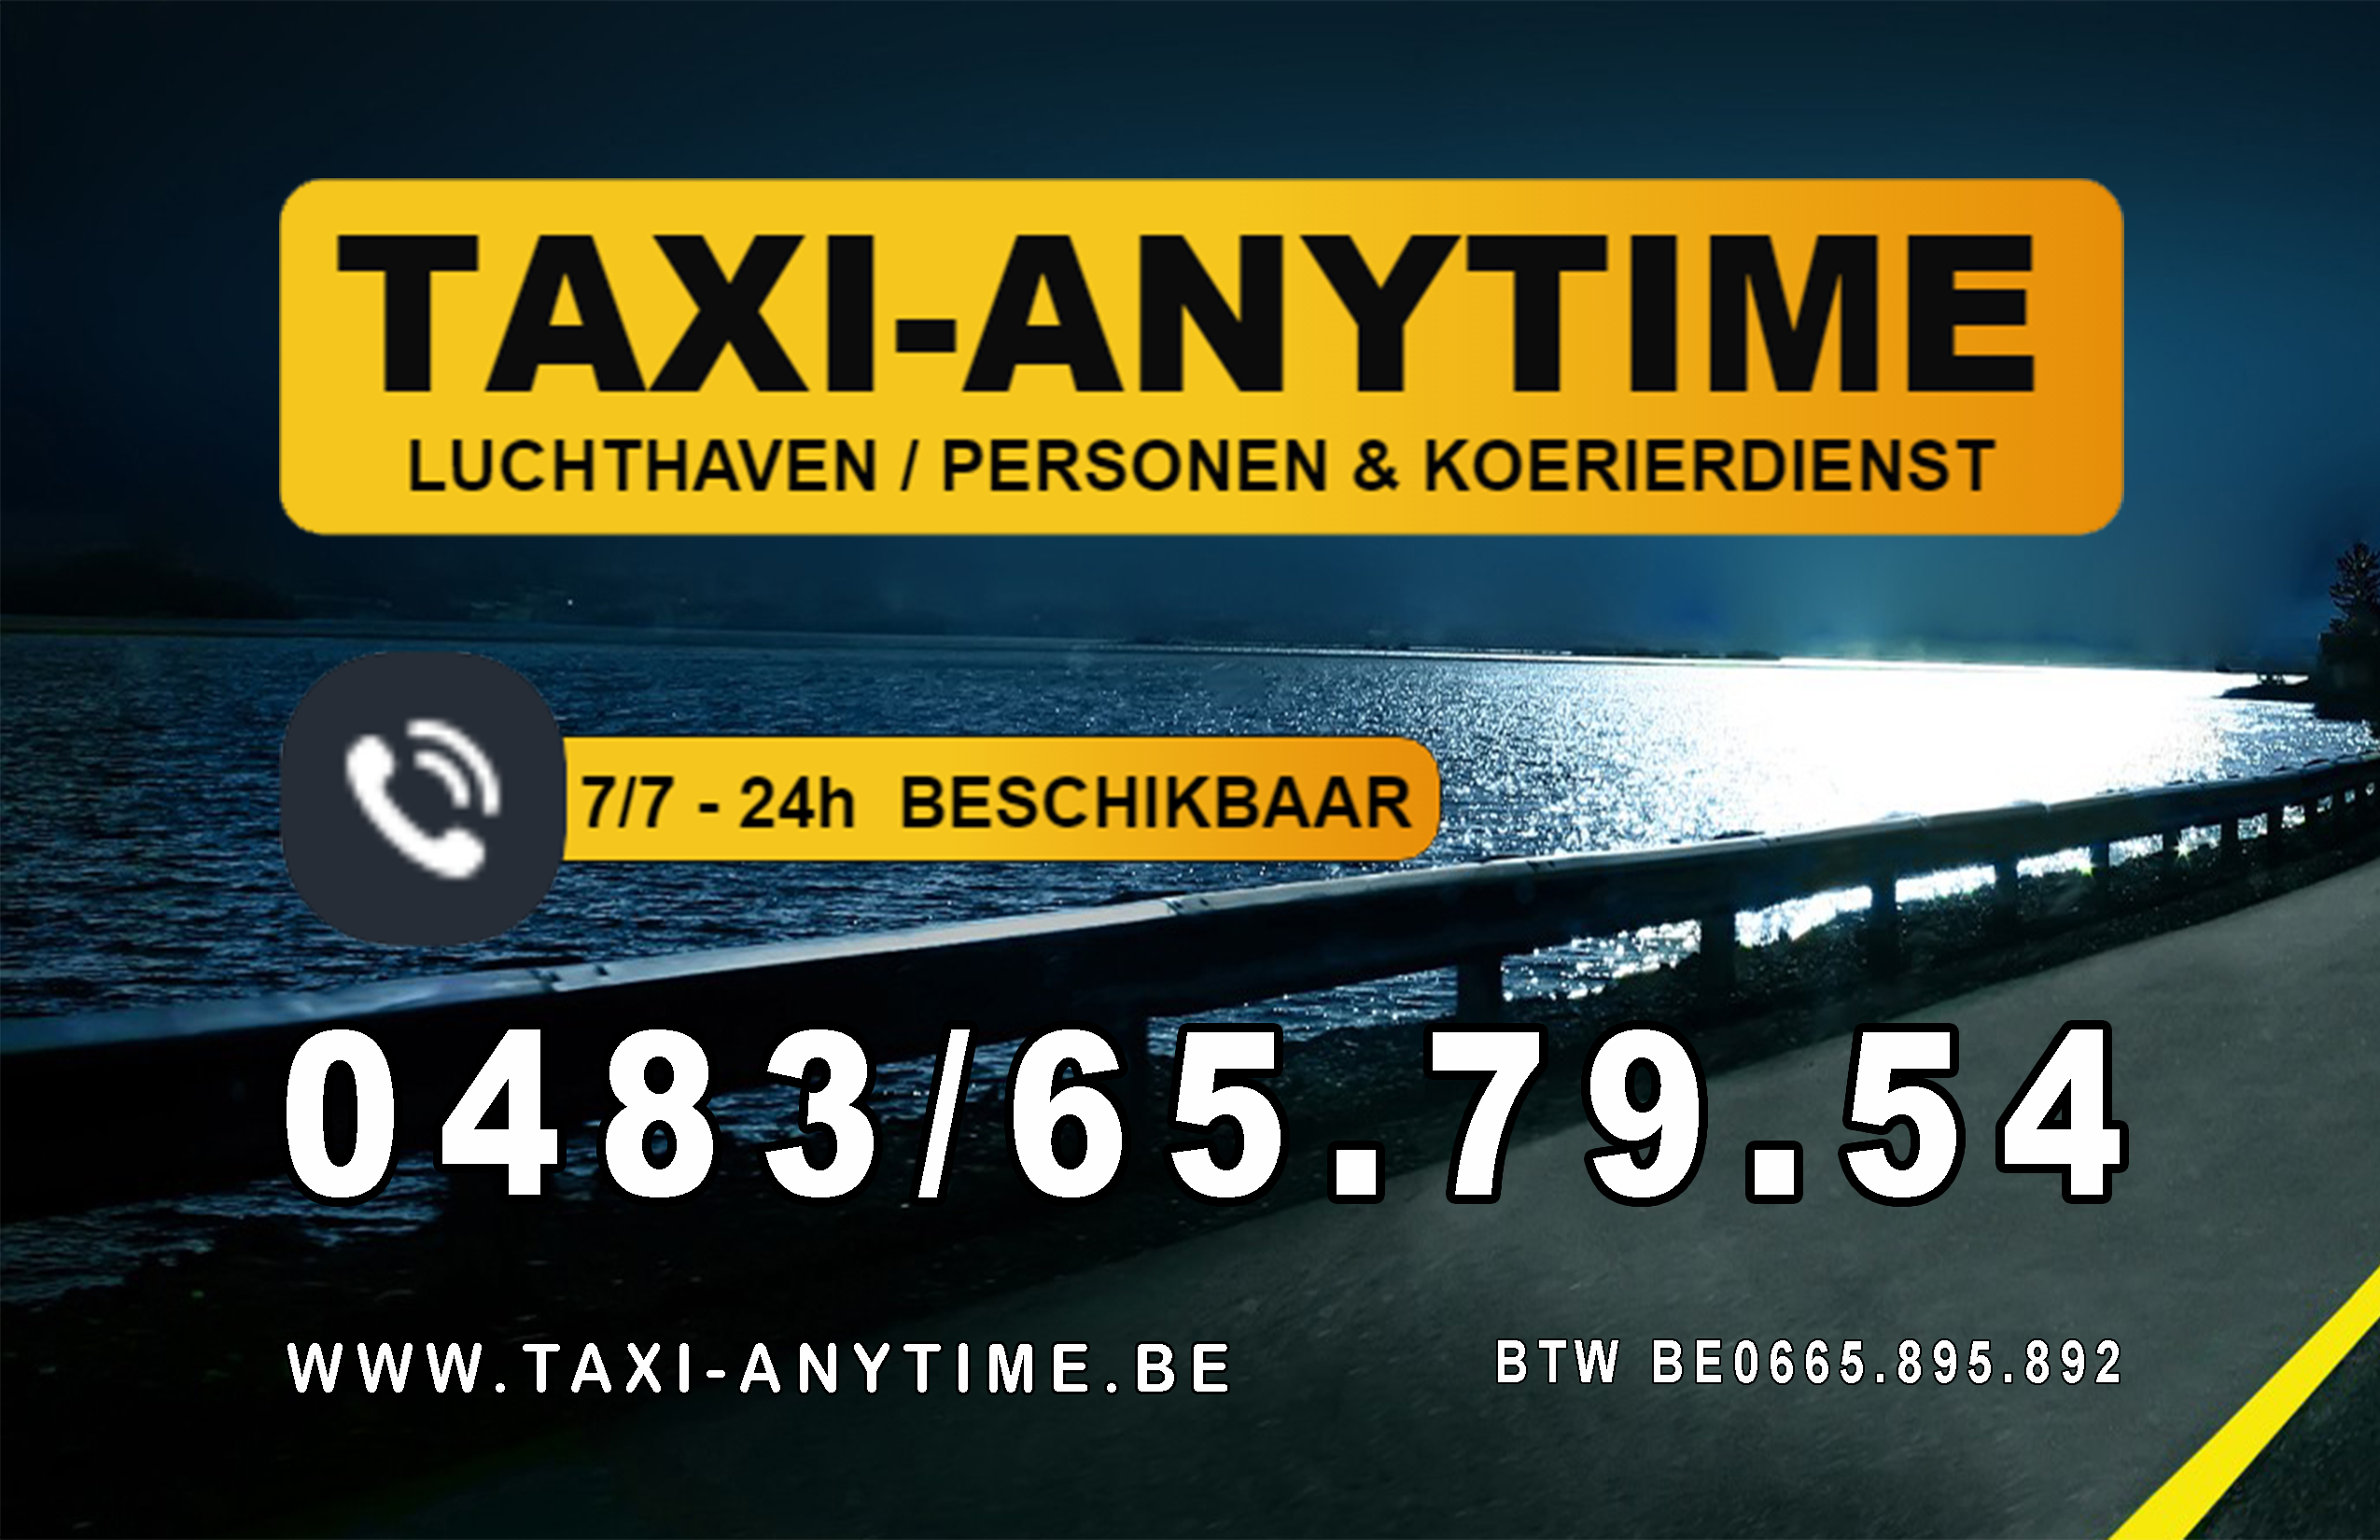 taxibedrijven met luchthavenvervoer Liedekerke Taxi-anytime